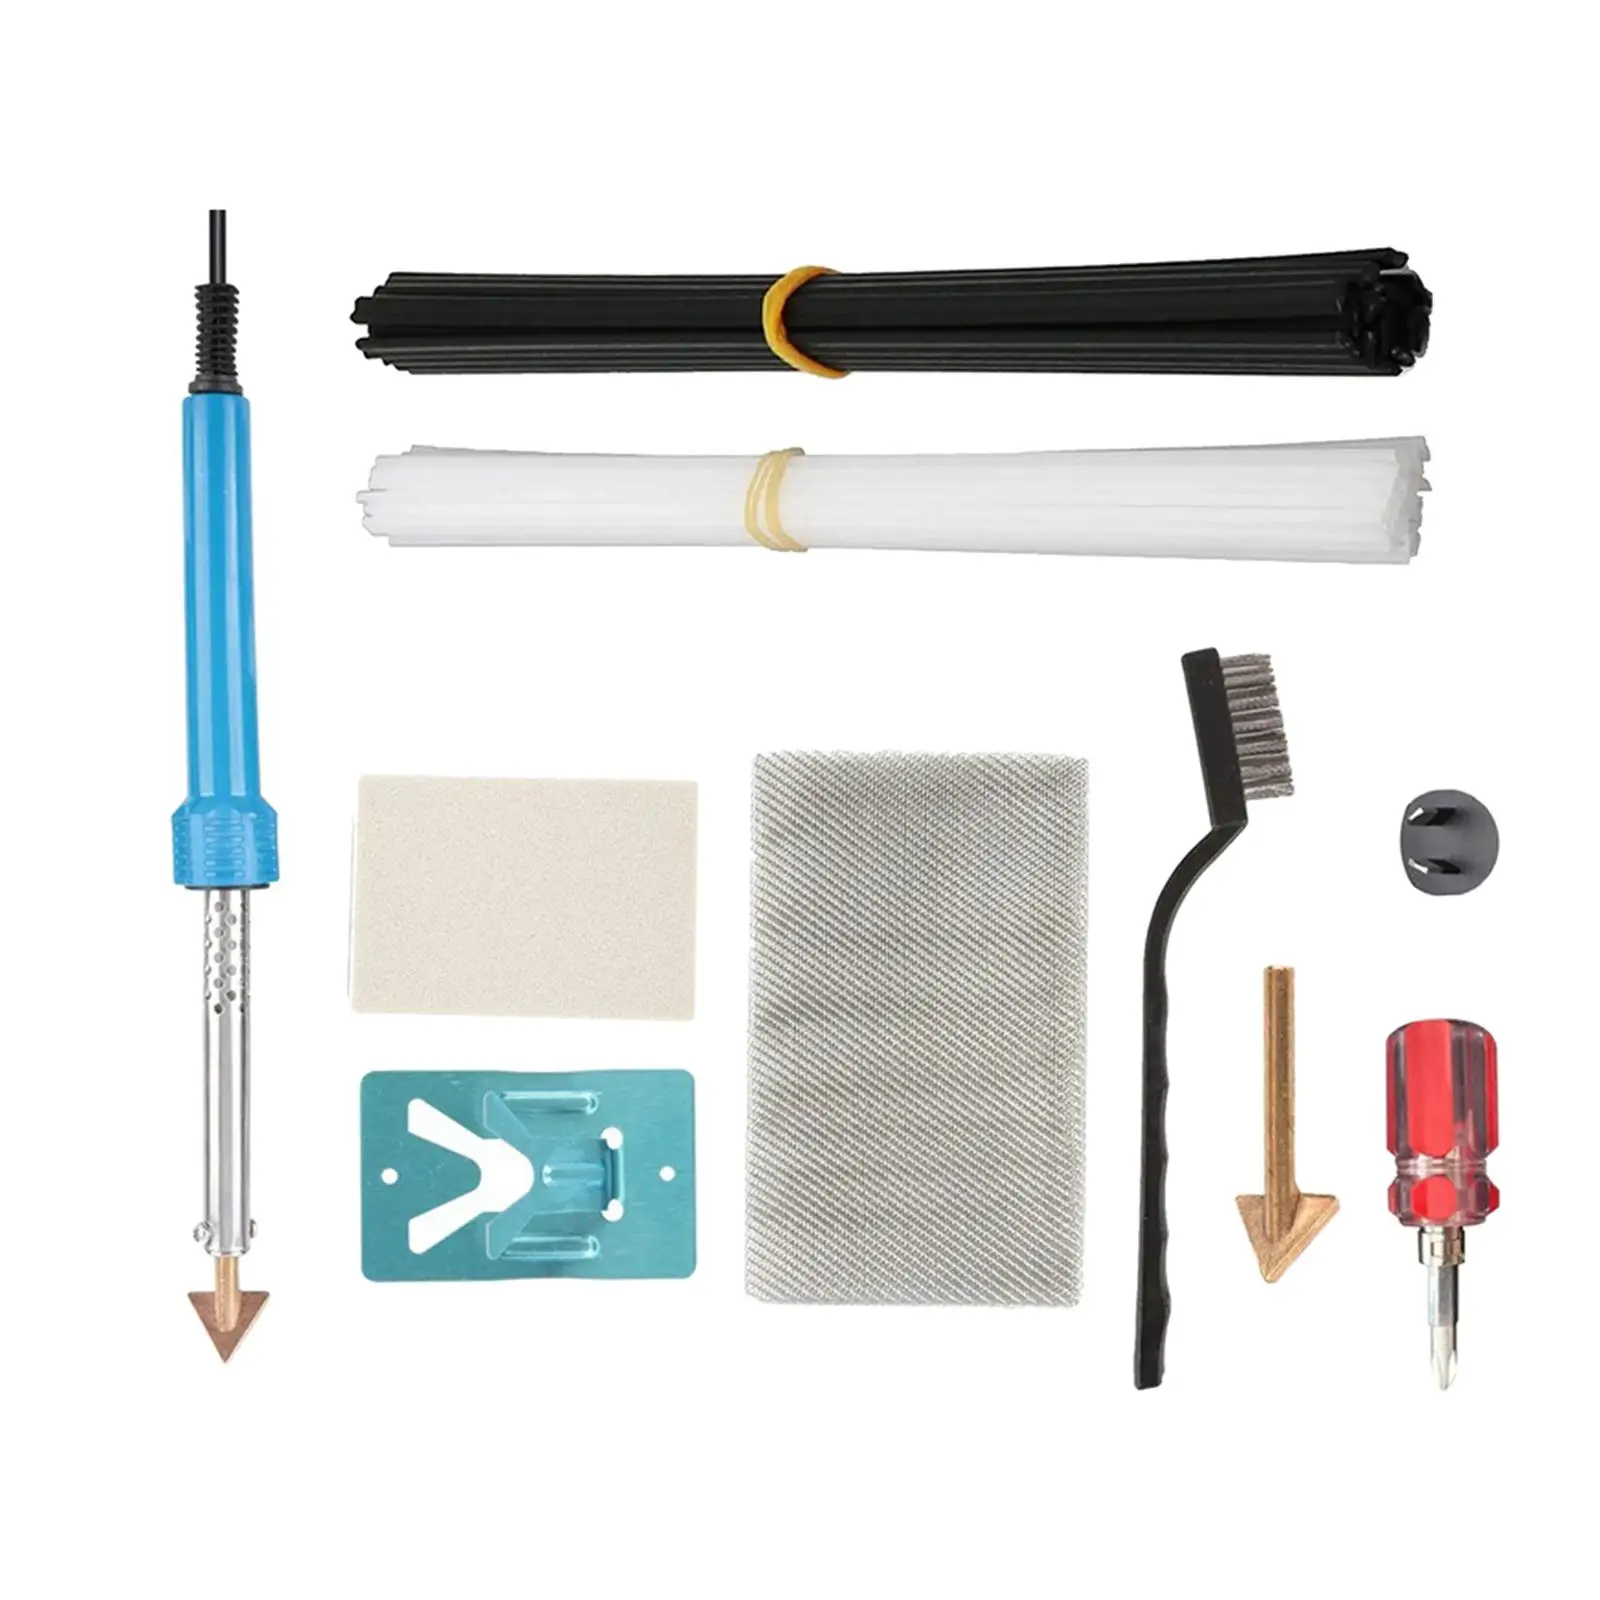 Plastic Welding Kit 1 Metal Stand 1 Metal Mesh 80W Welder Tools for Kayak